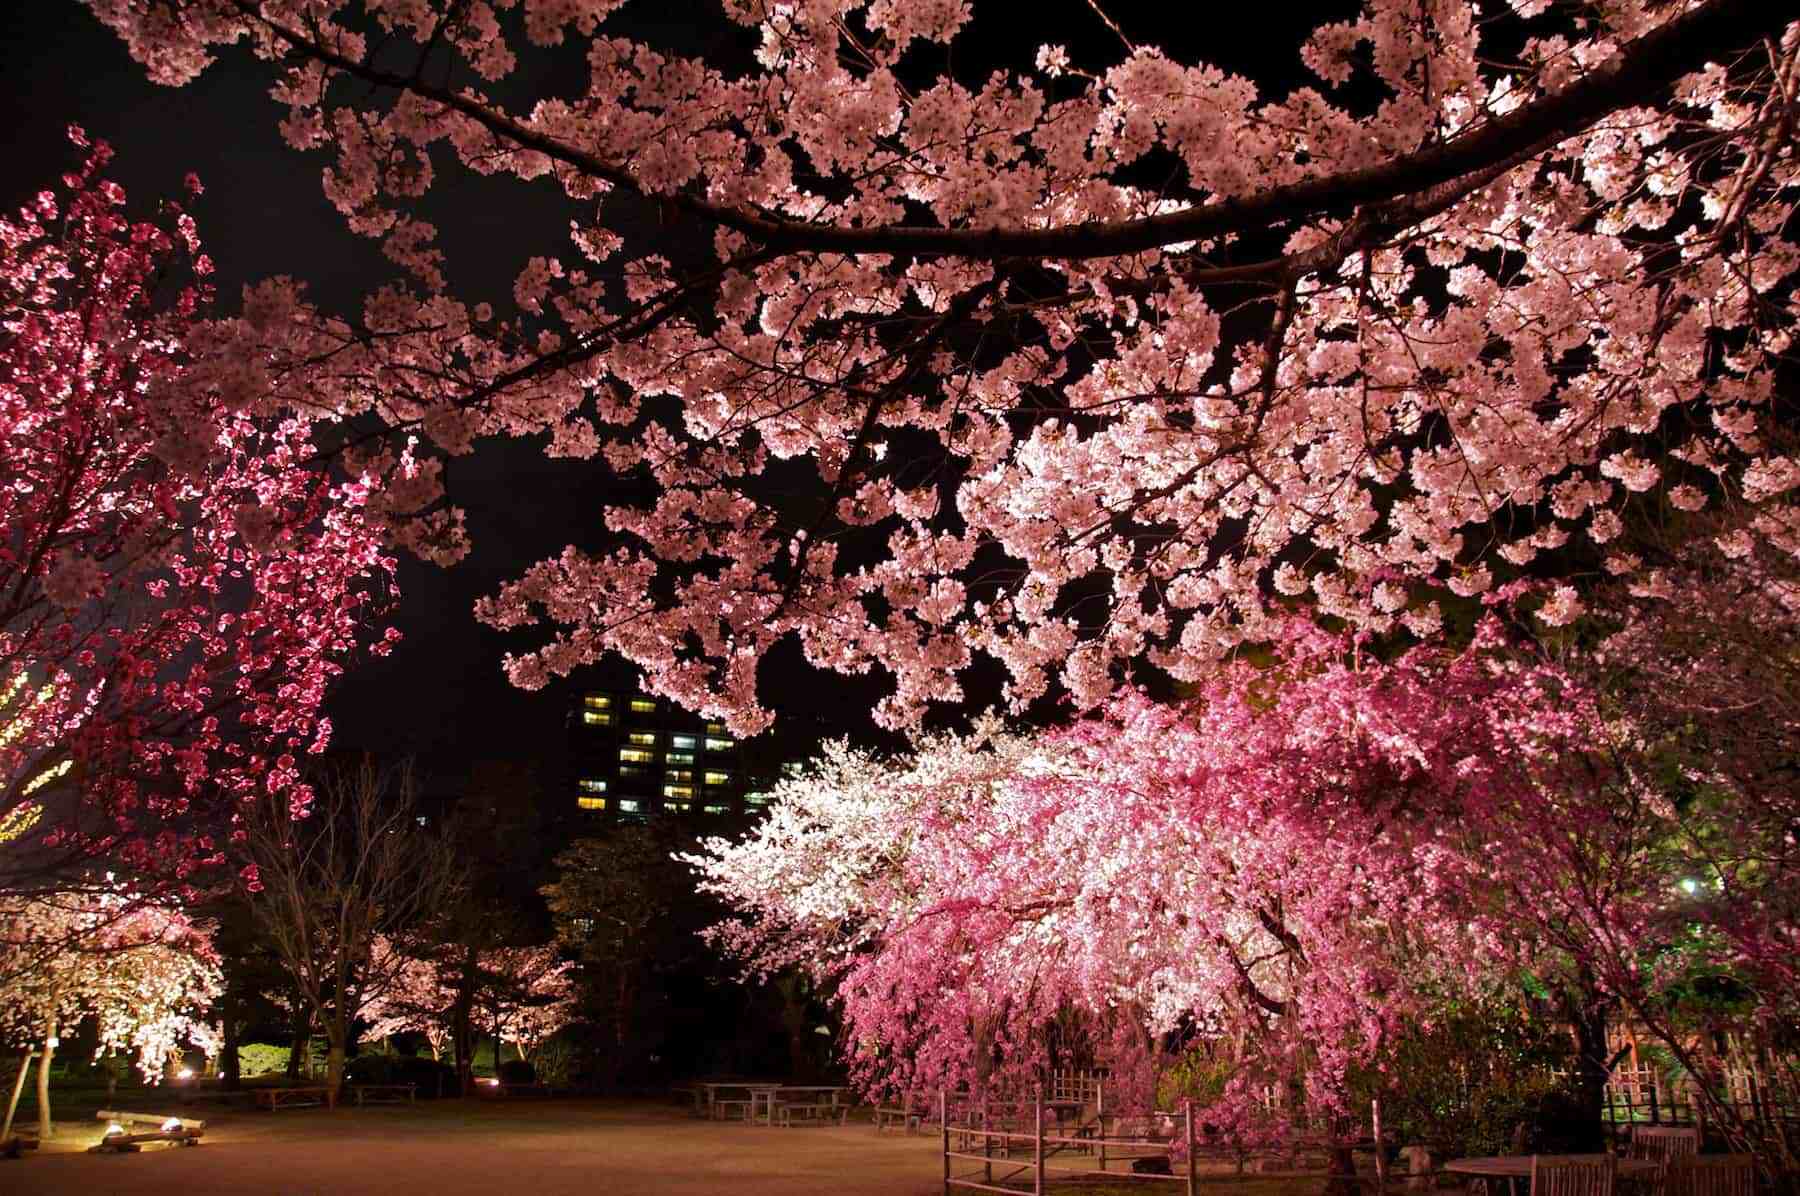 illuminated cherry blossom image